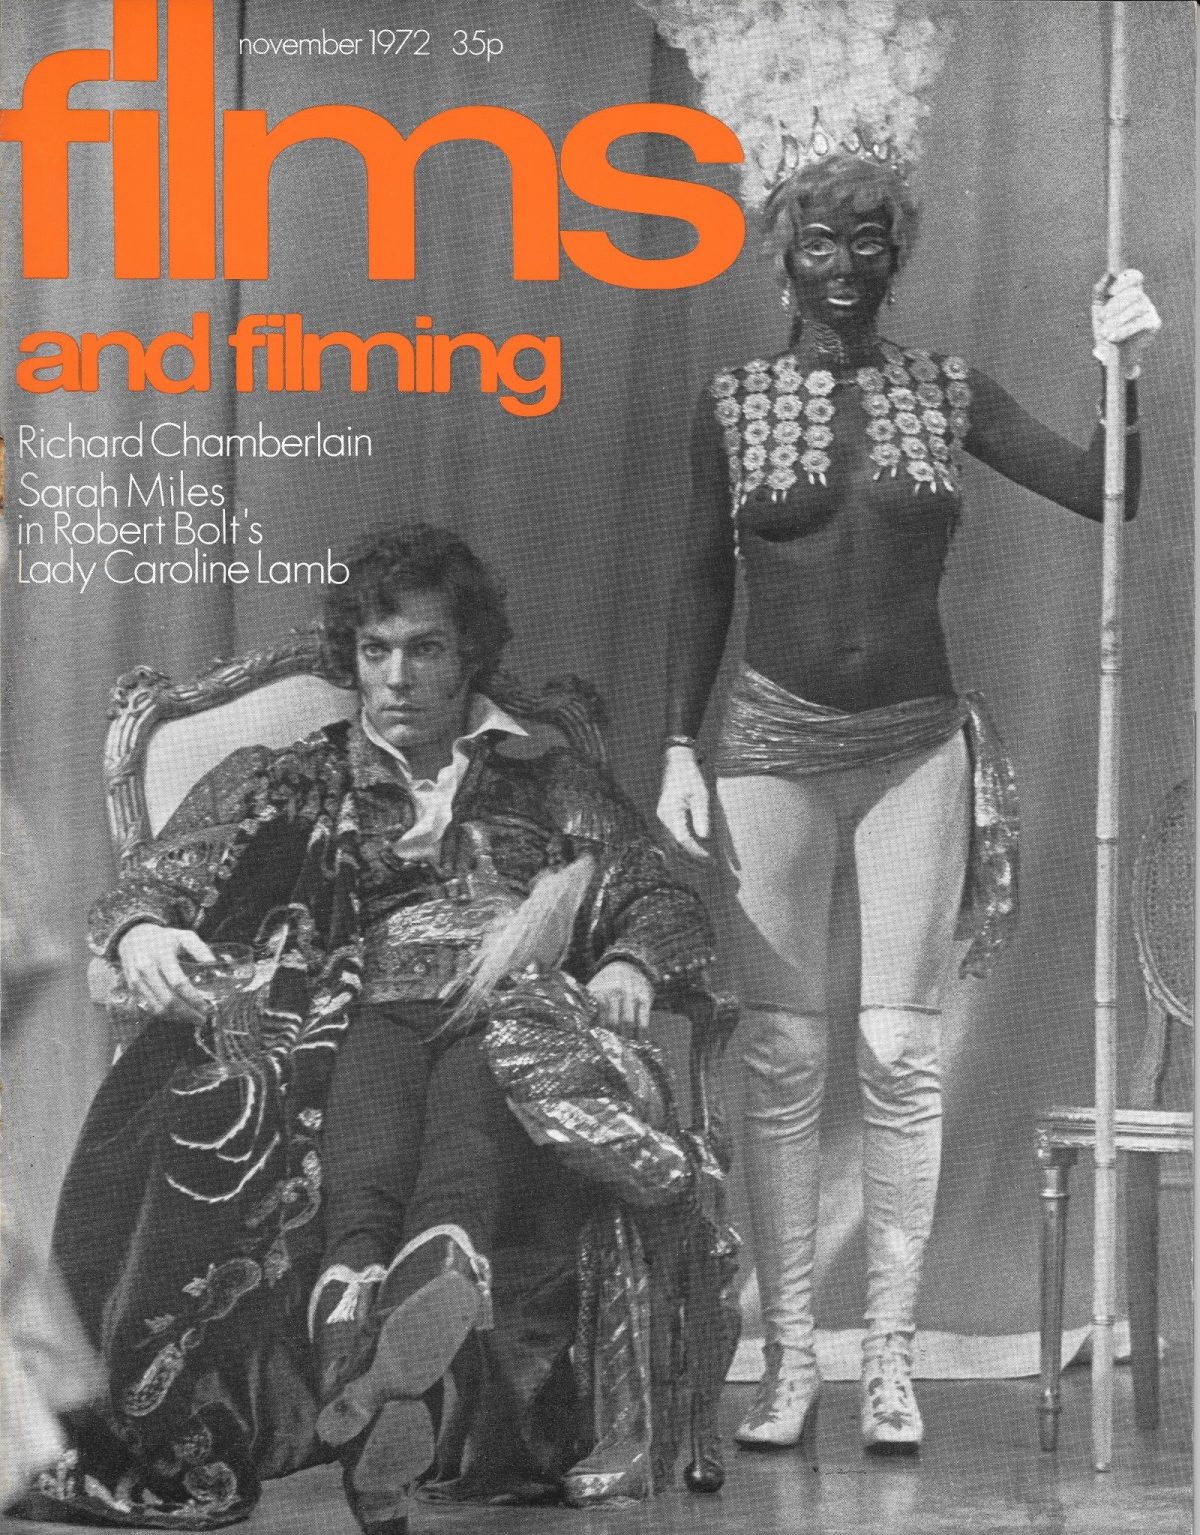 Films & Filming, film, magazines, Robert Bolt, Richard Chamberlain, Caroline Lamb, 1970s